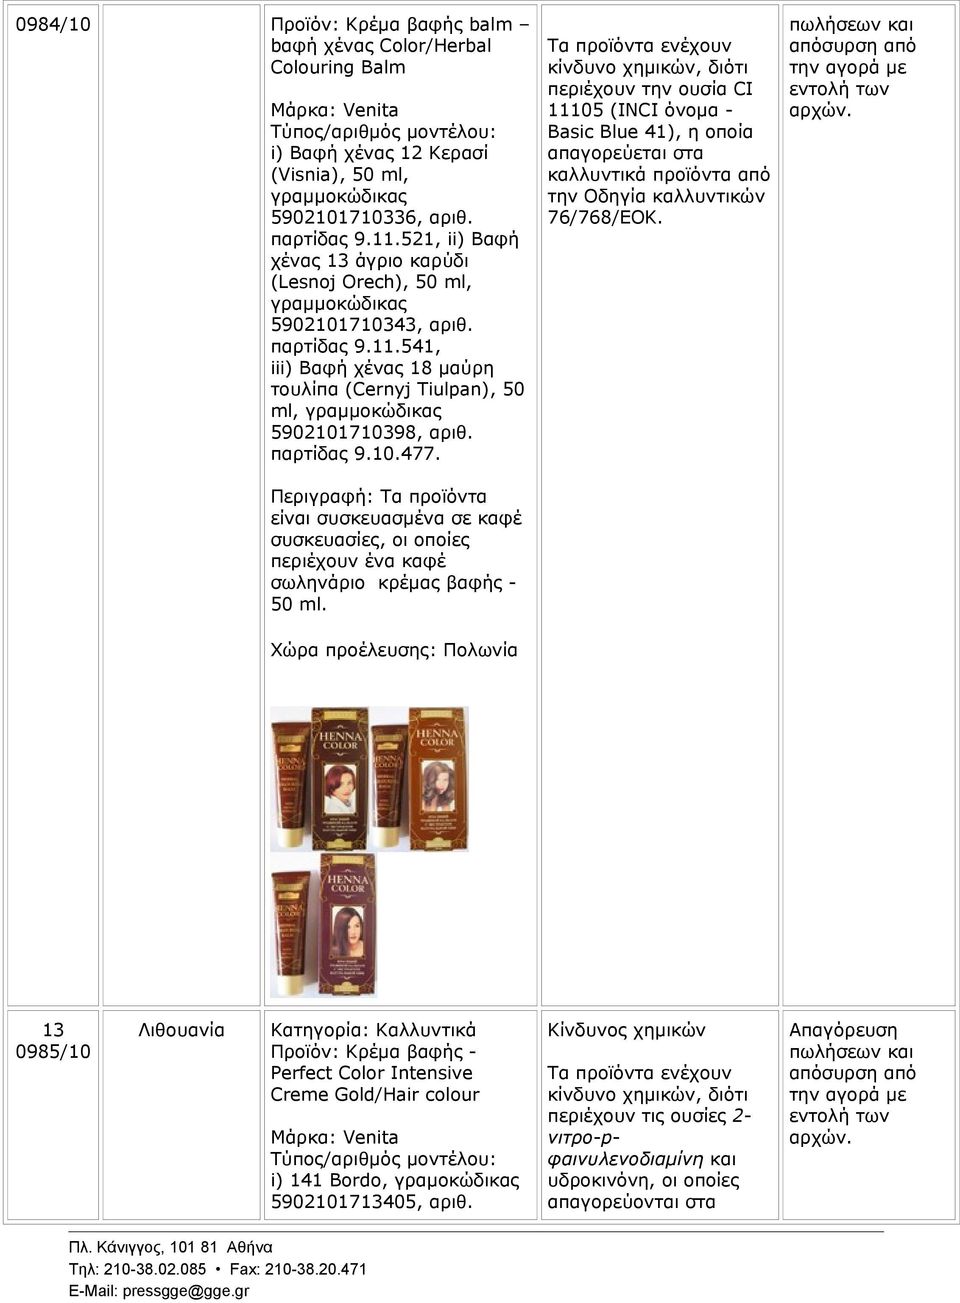 541, iii) Βαφή χένας 18 μαύρη τουλίπα (Cernyj Tiulpan), 50 ml, γραμμοκώδικας 5902101710398, αριθ. παρτίδας 9.10.477.